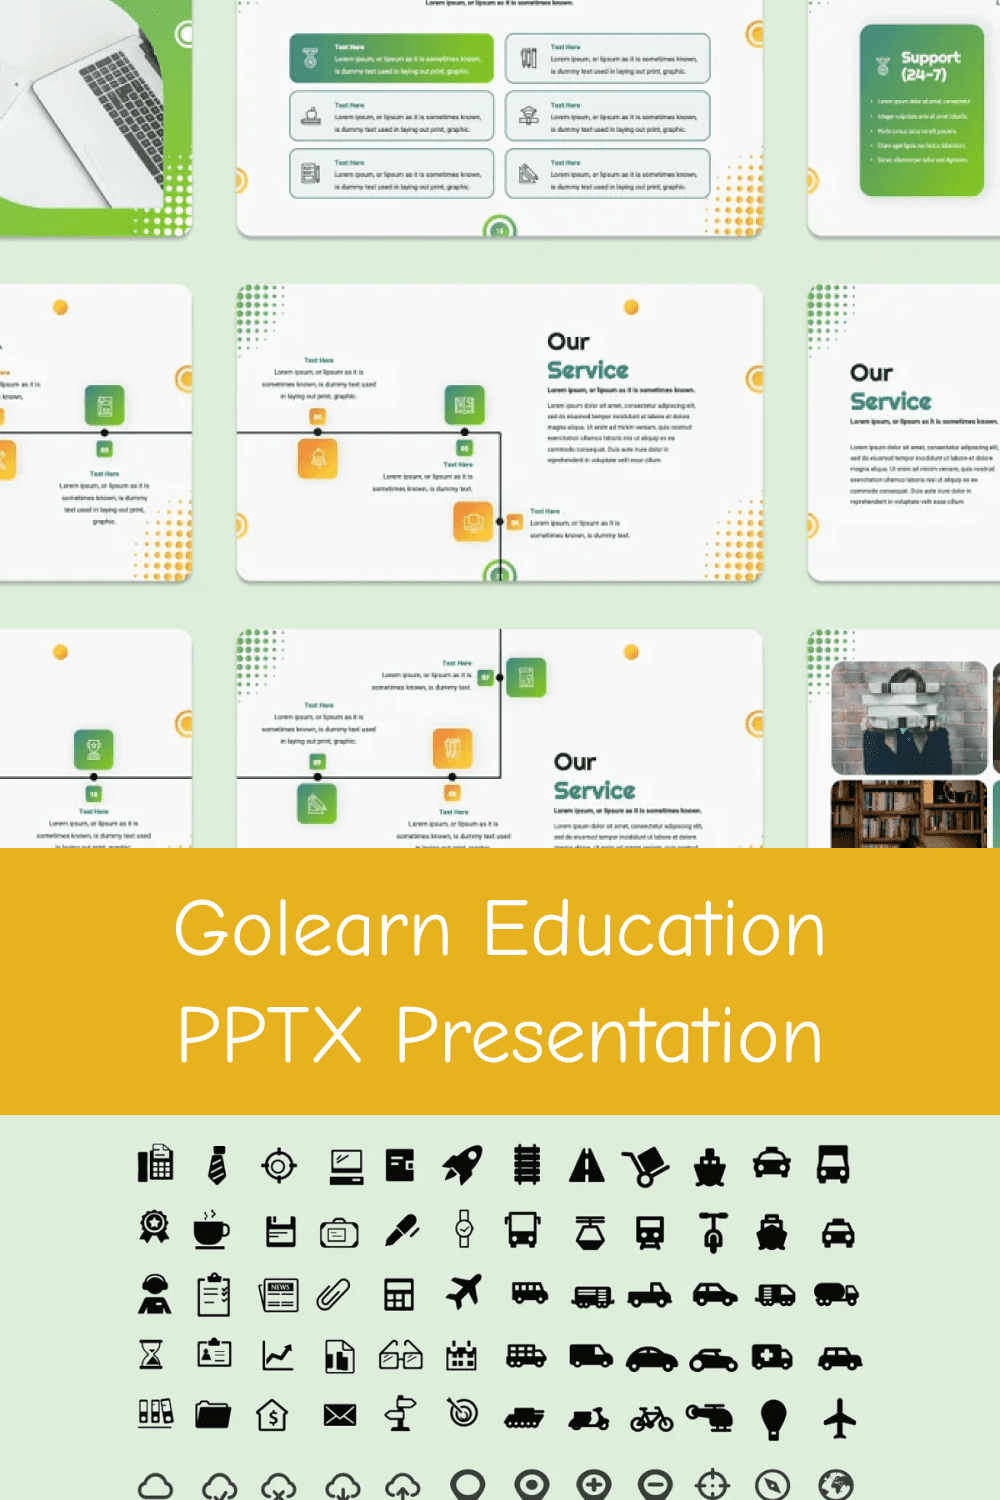 golearn education pptx presentation pinterest image.